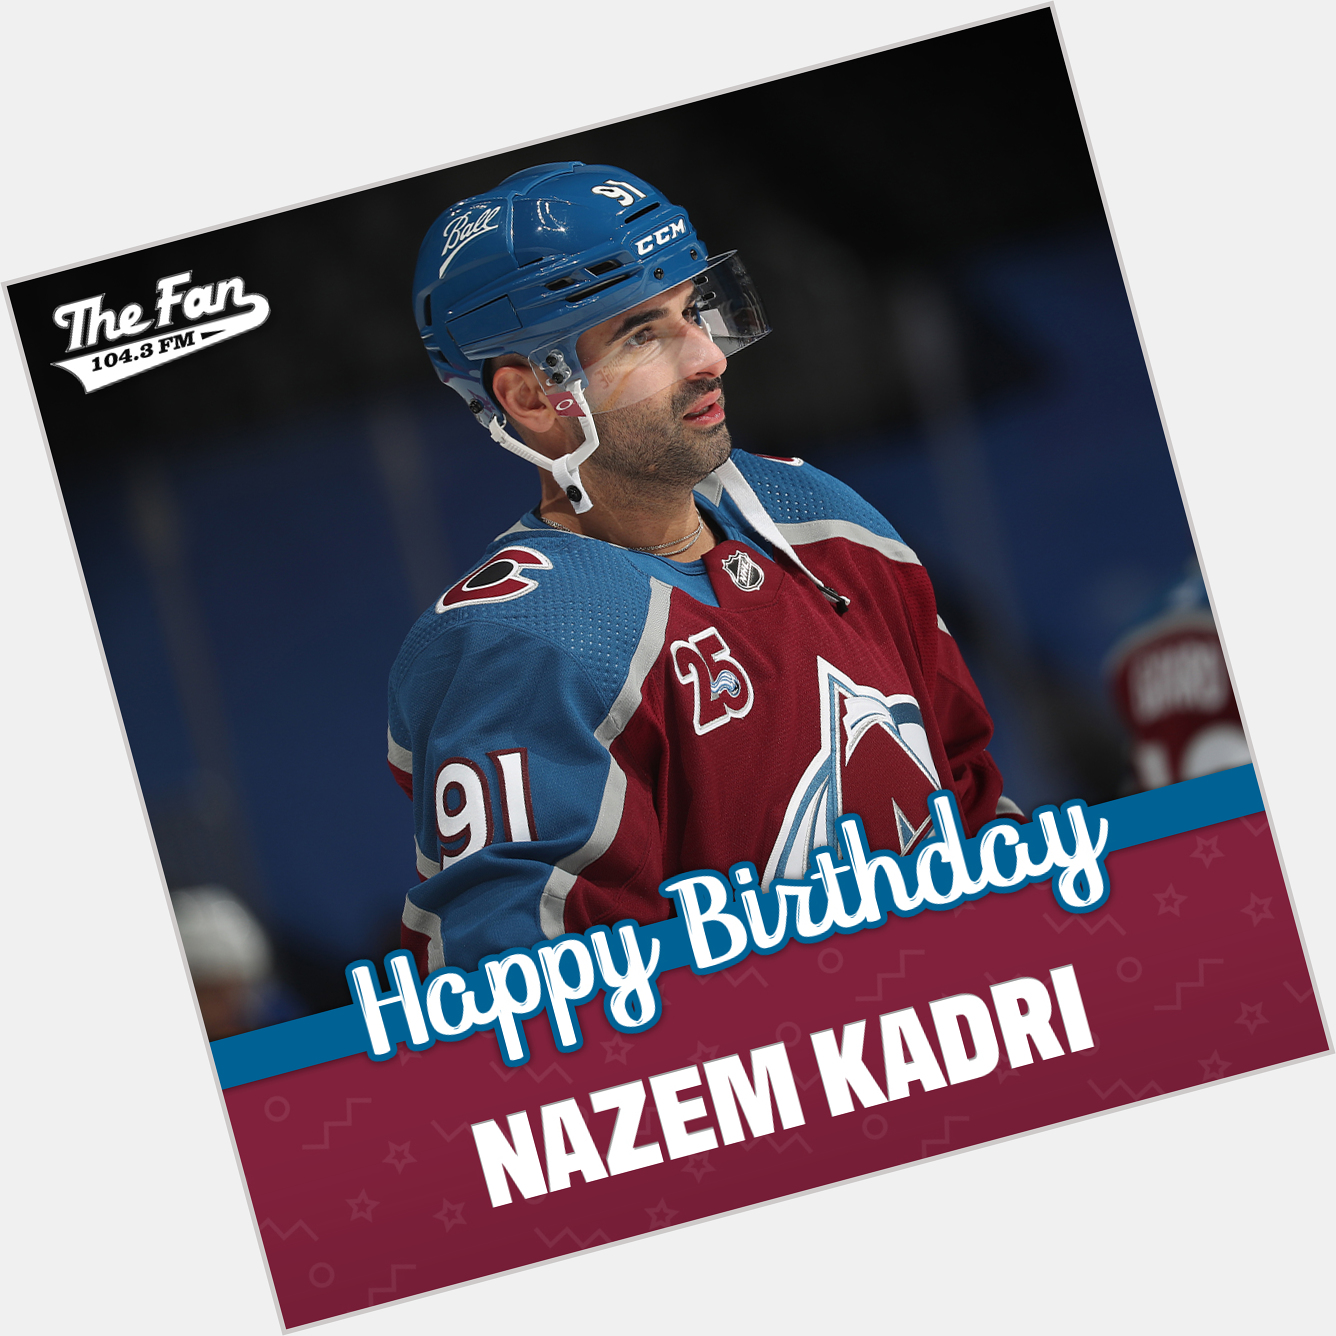 Happy birthday to center Nazem Kadri! | 